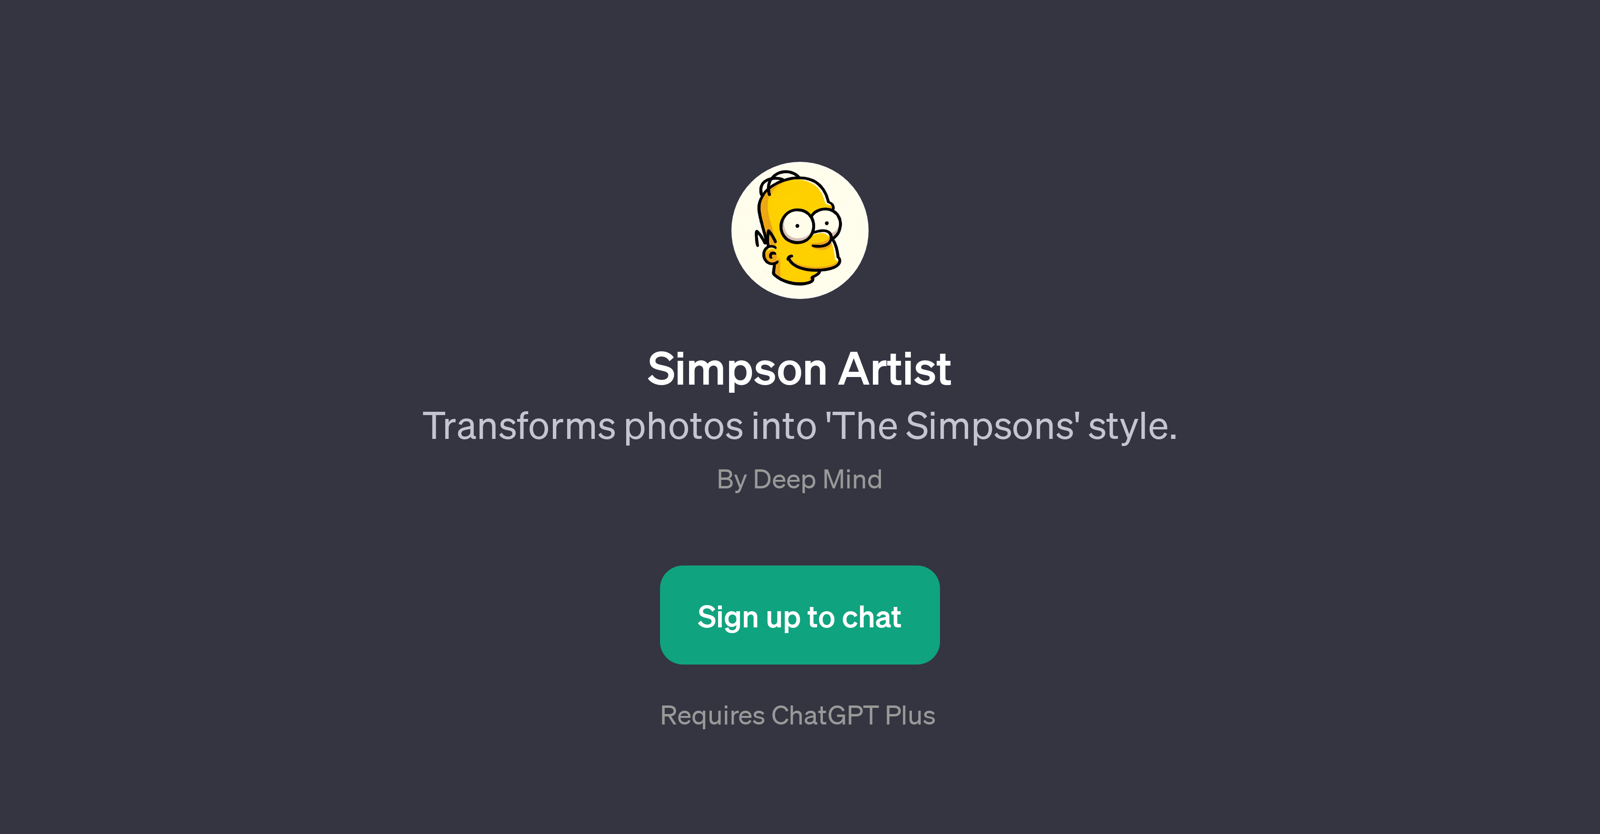 Simpson Artist website